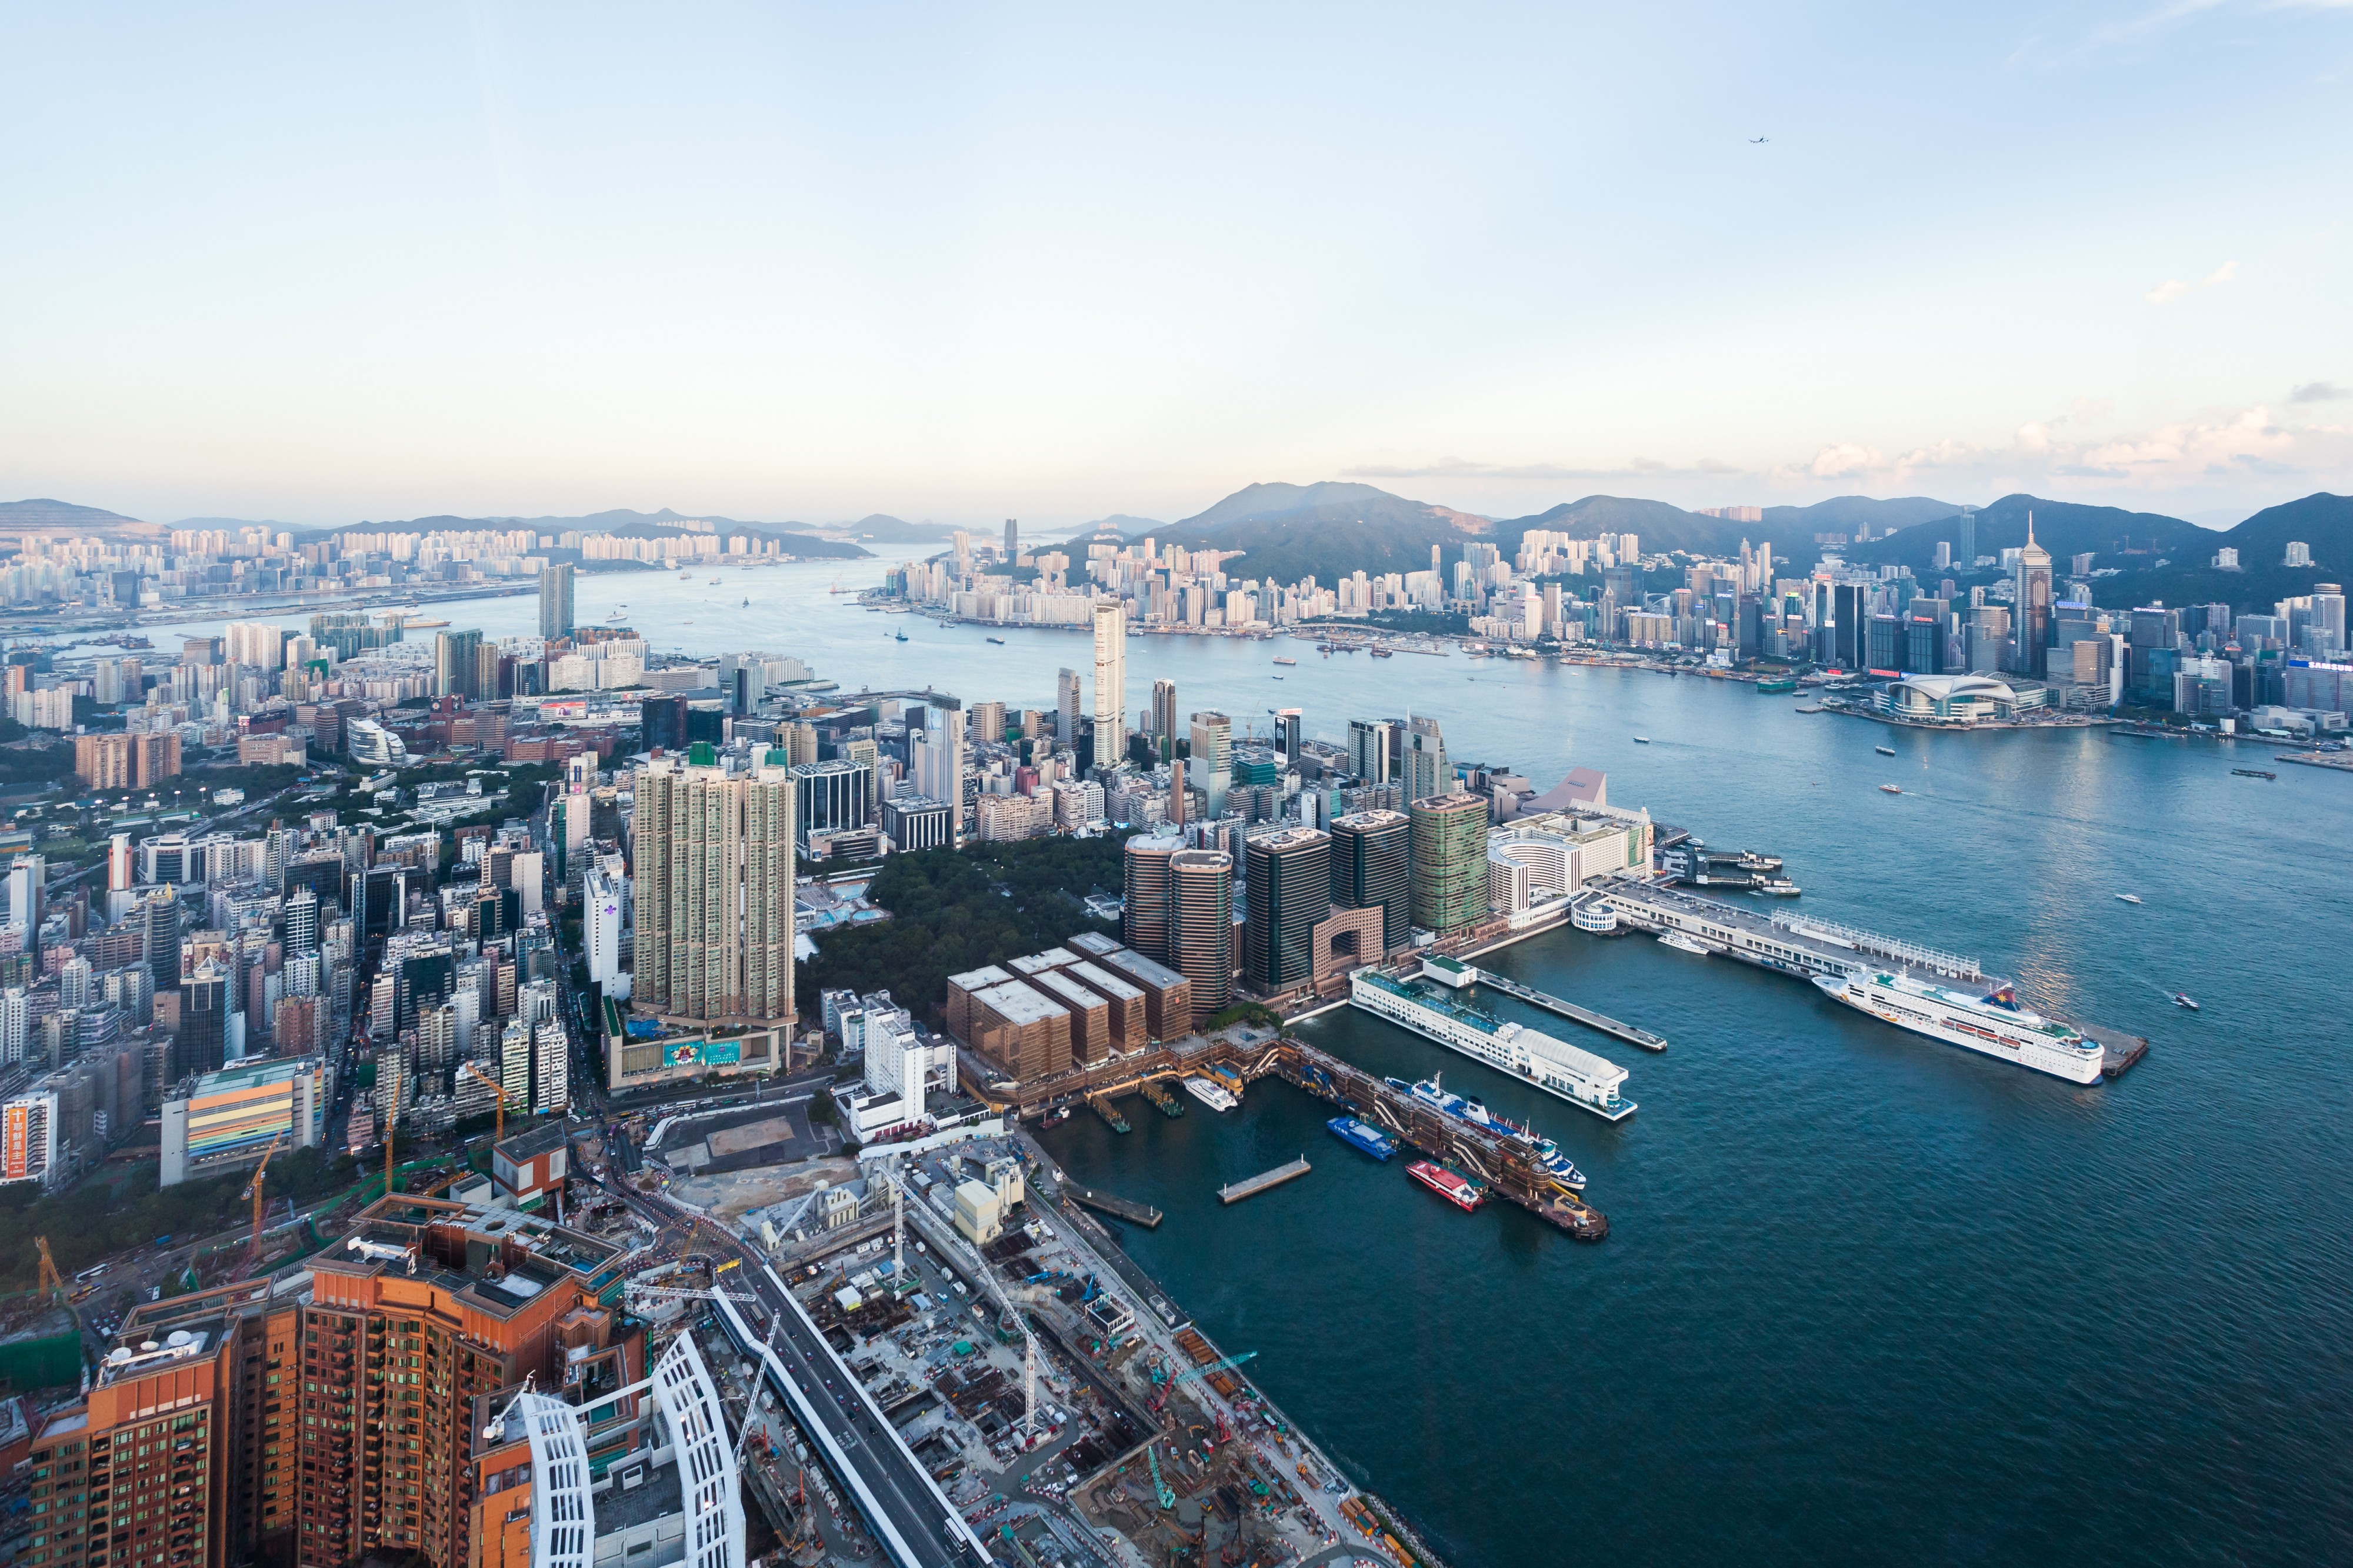 Vista del Puerto de Victoria desde Sky100, Hong Kong, 2013-08-09, DD 02